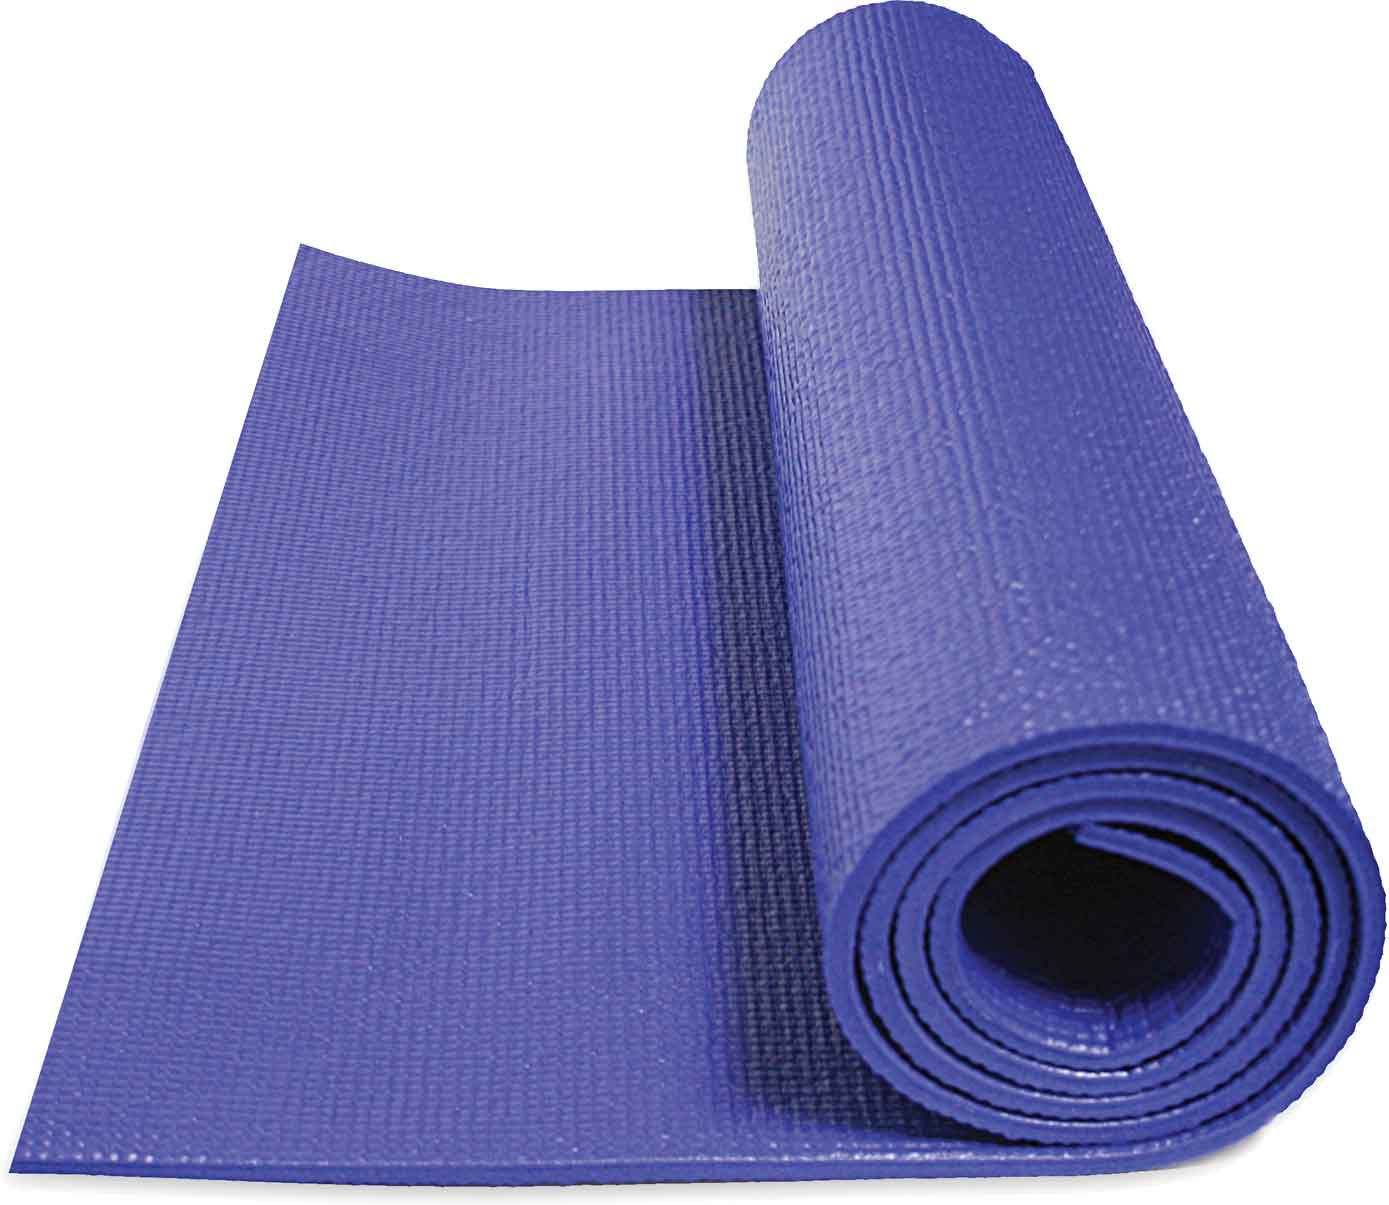 how to ship a yoga mat